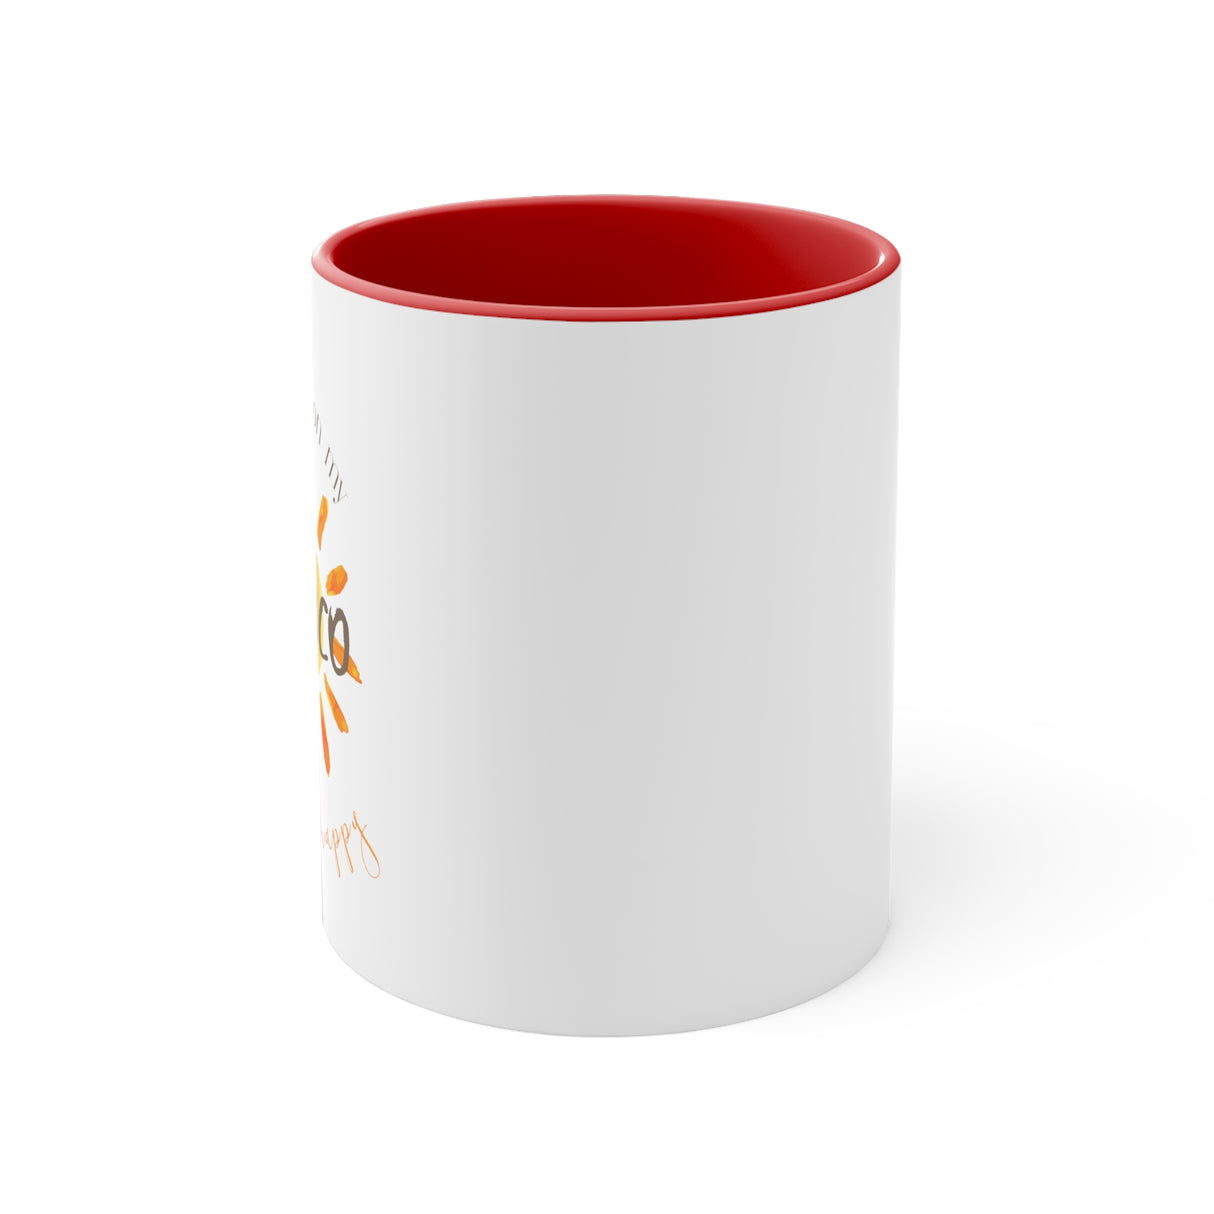 Accent Coffee Mug, 11oz | sunshine